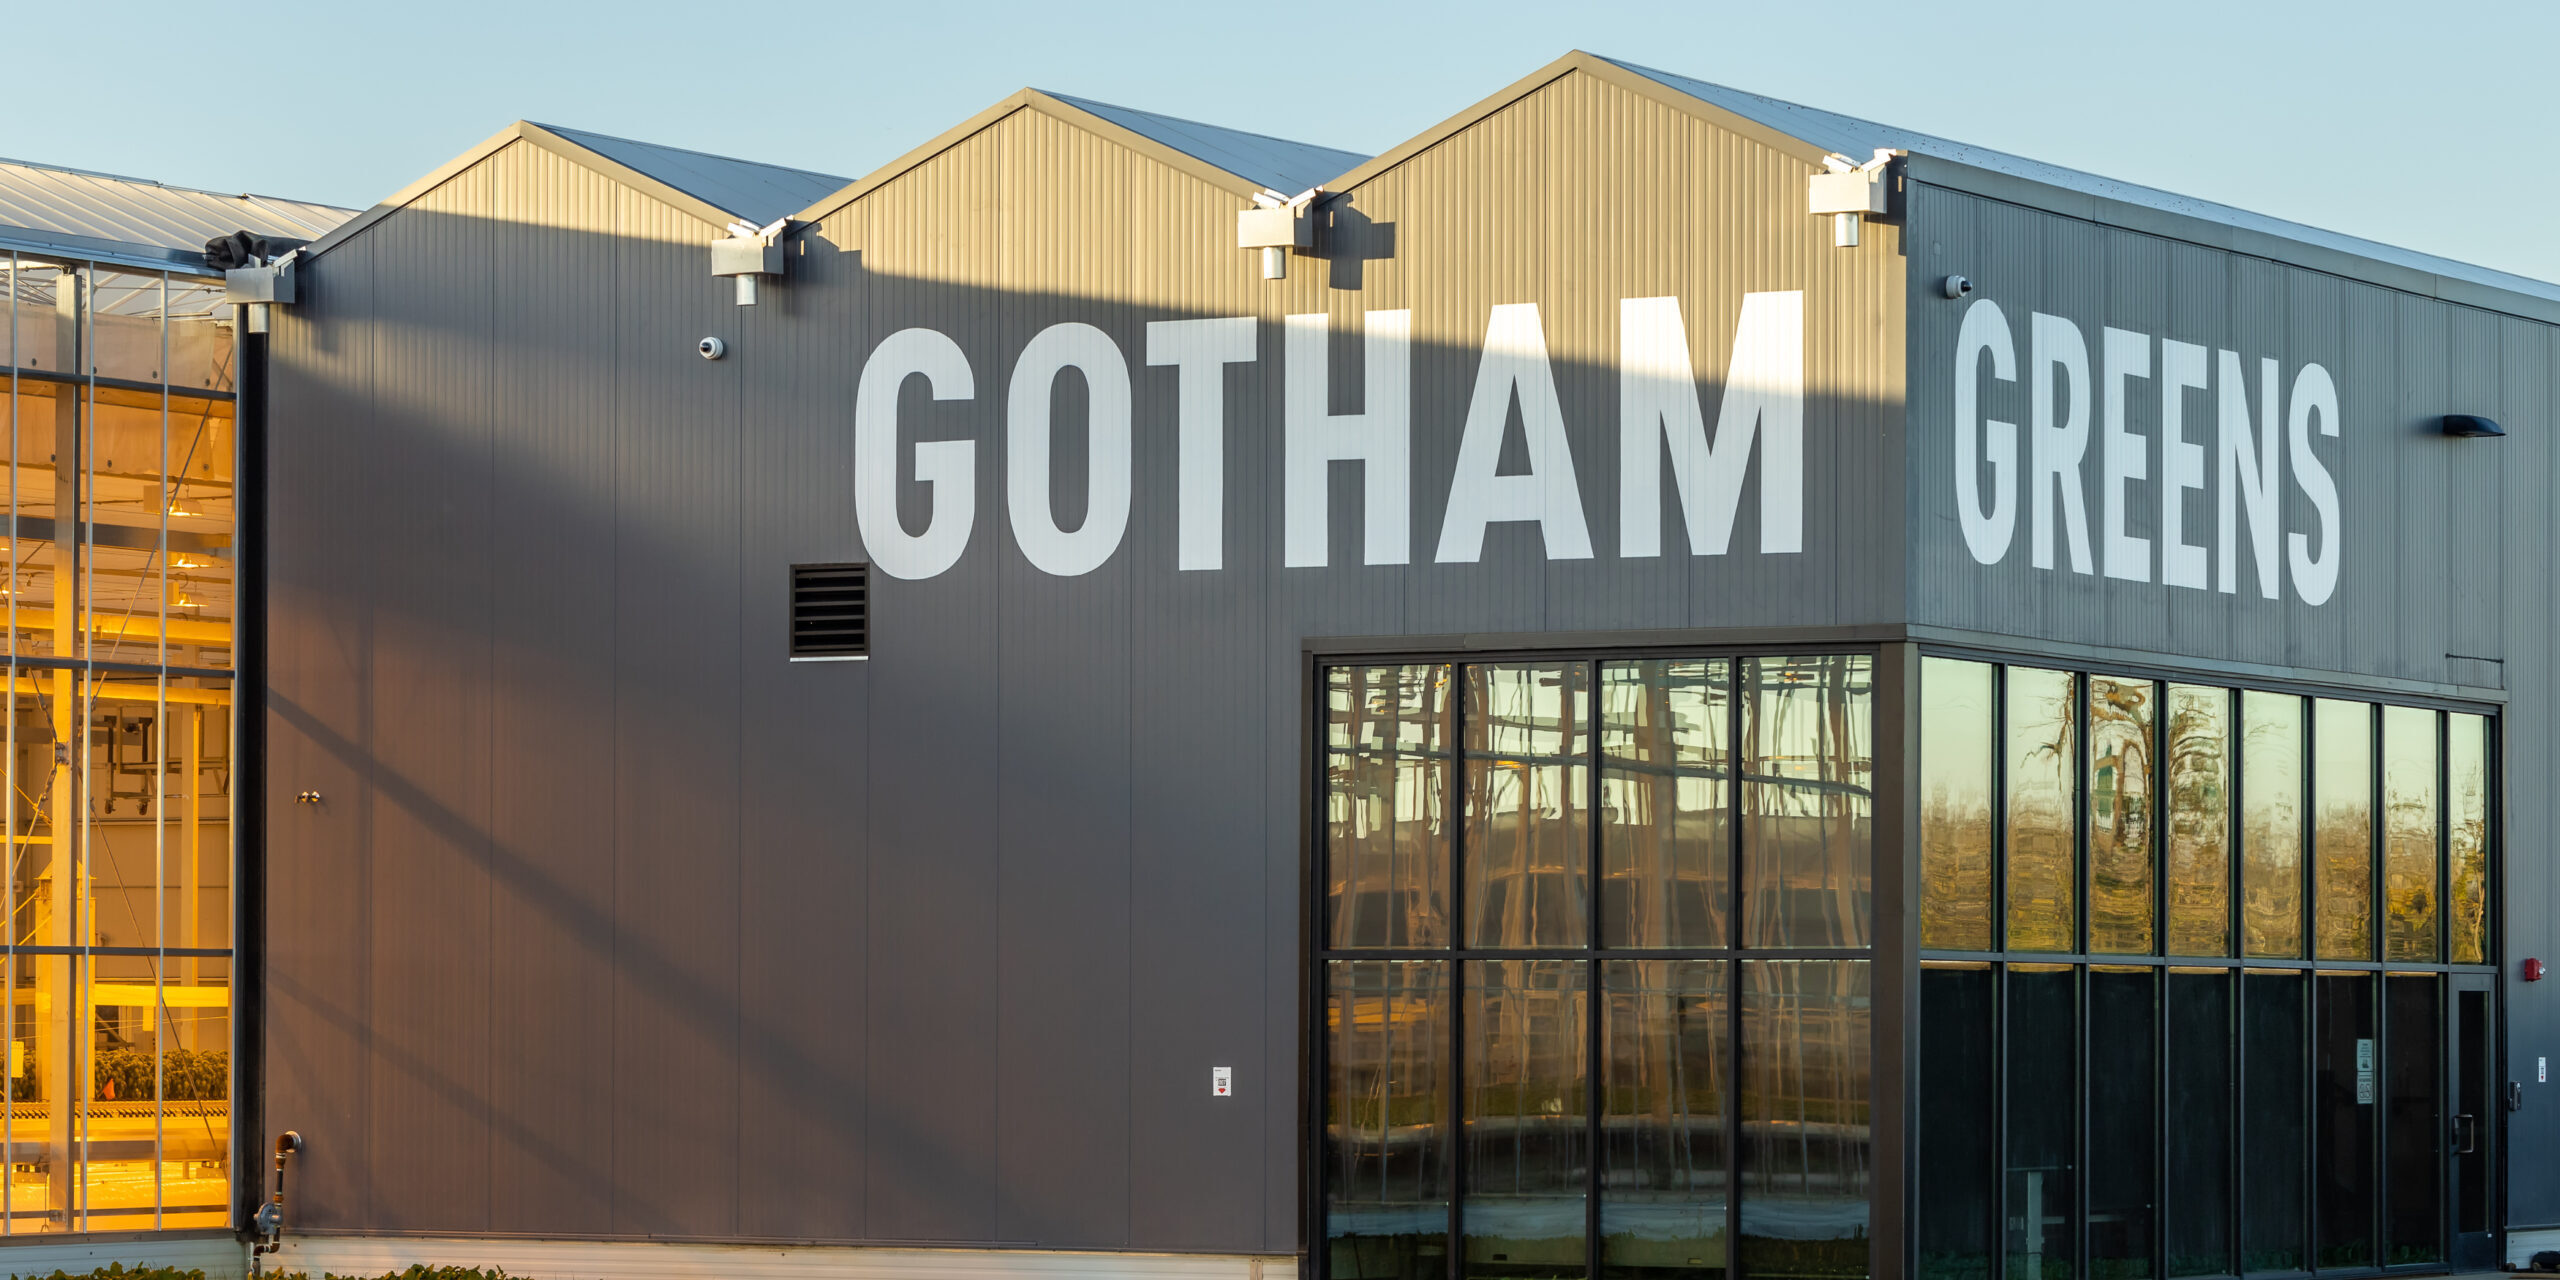 360° Tour of Gotham Greens' Urban Rooftop Farm